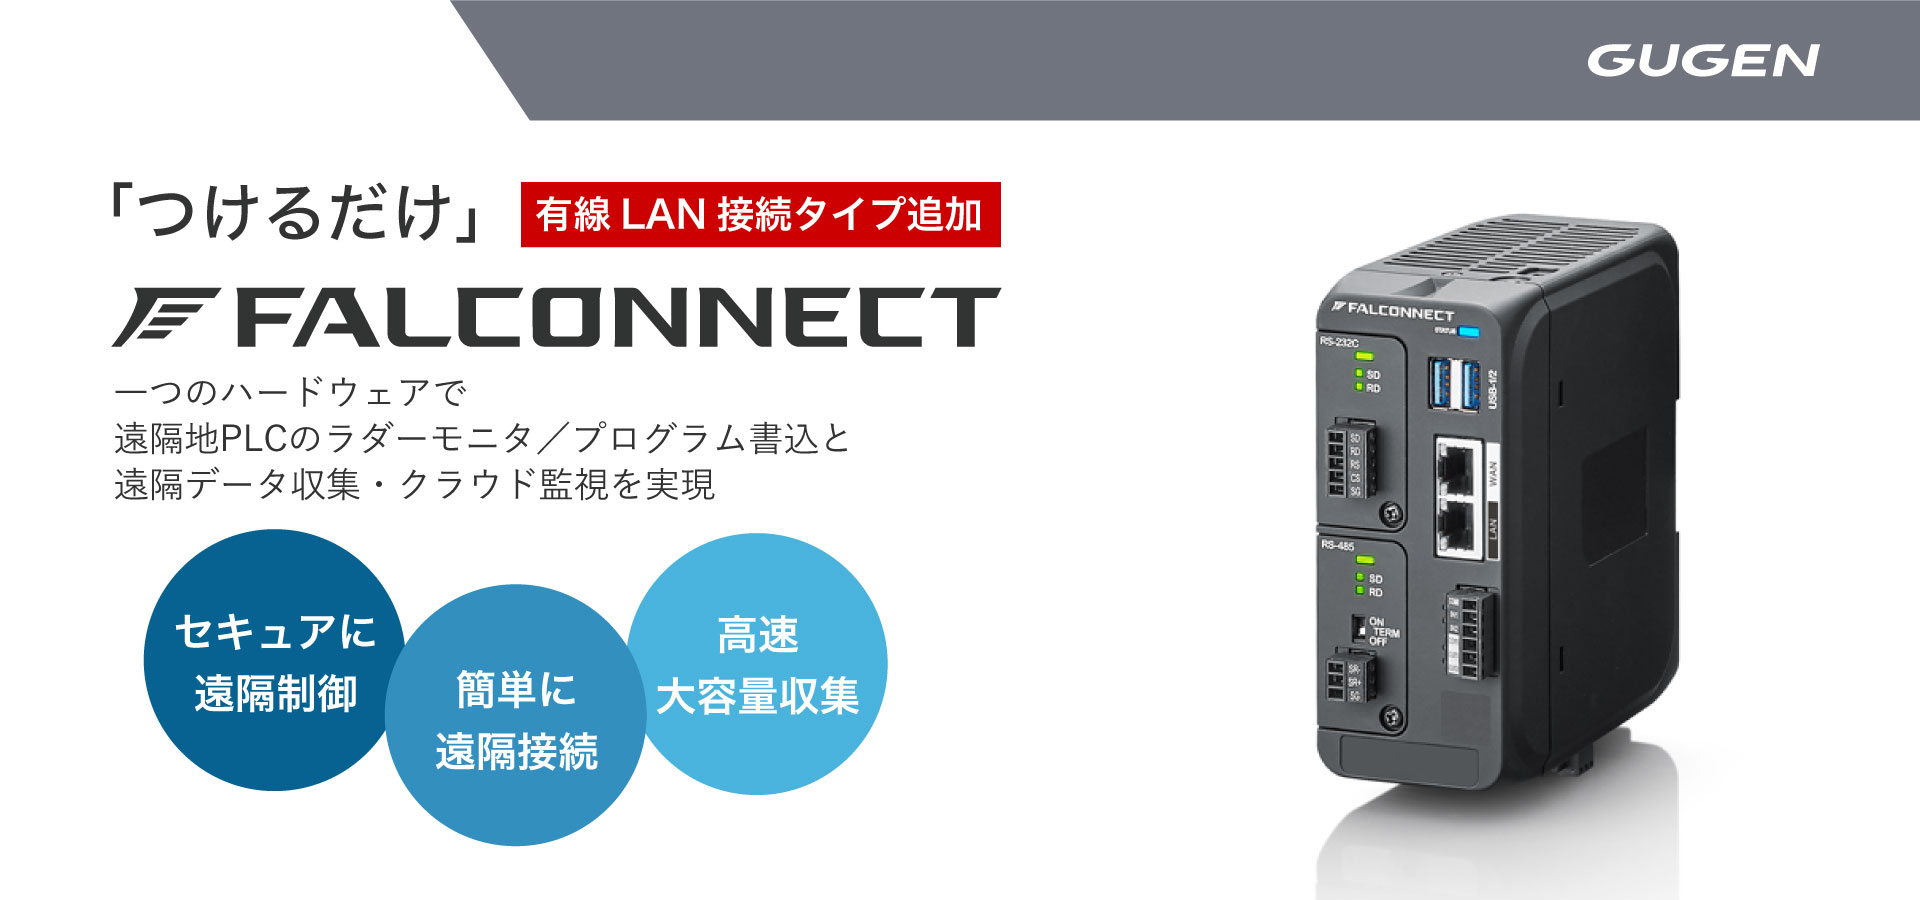 GUGEN FALCONNECT 有線LAN接続タイプをラインアップに追加